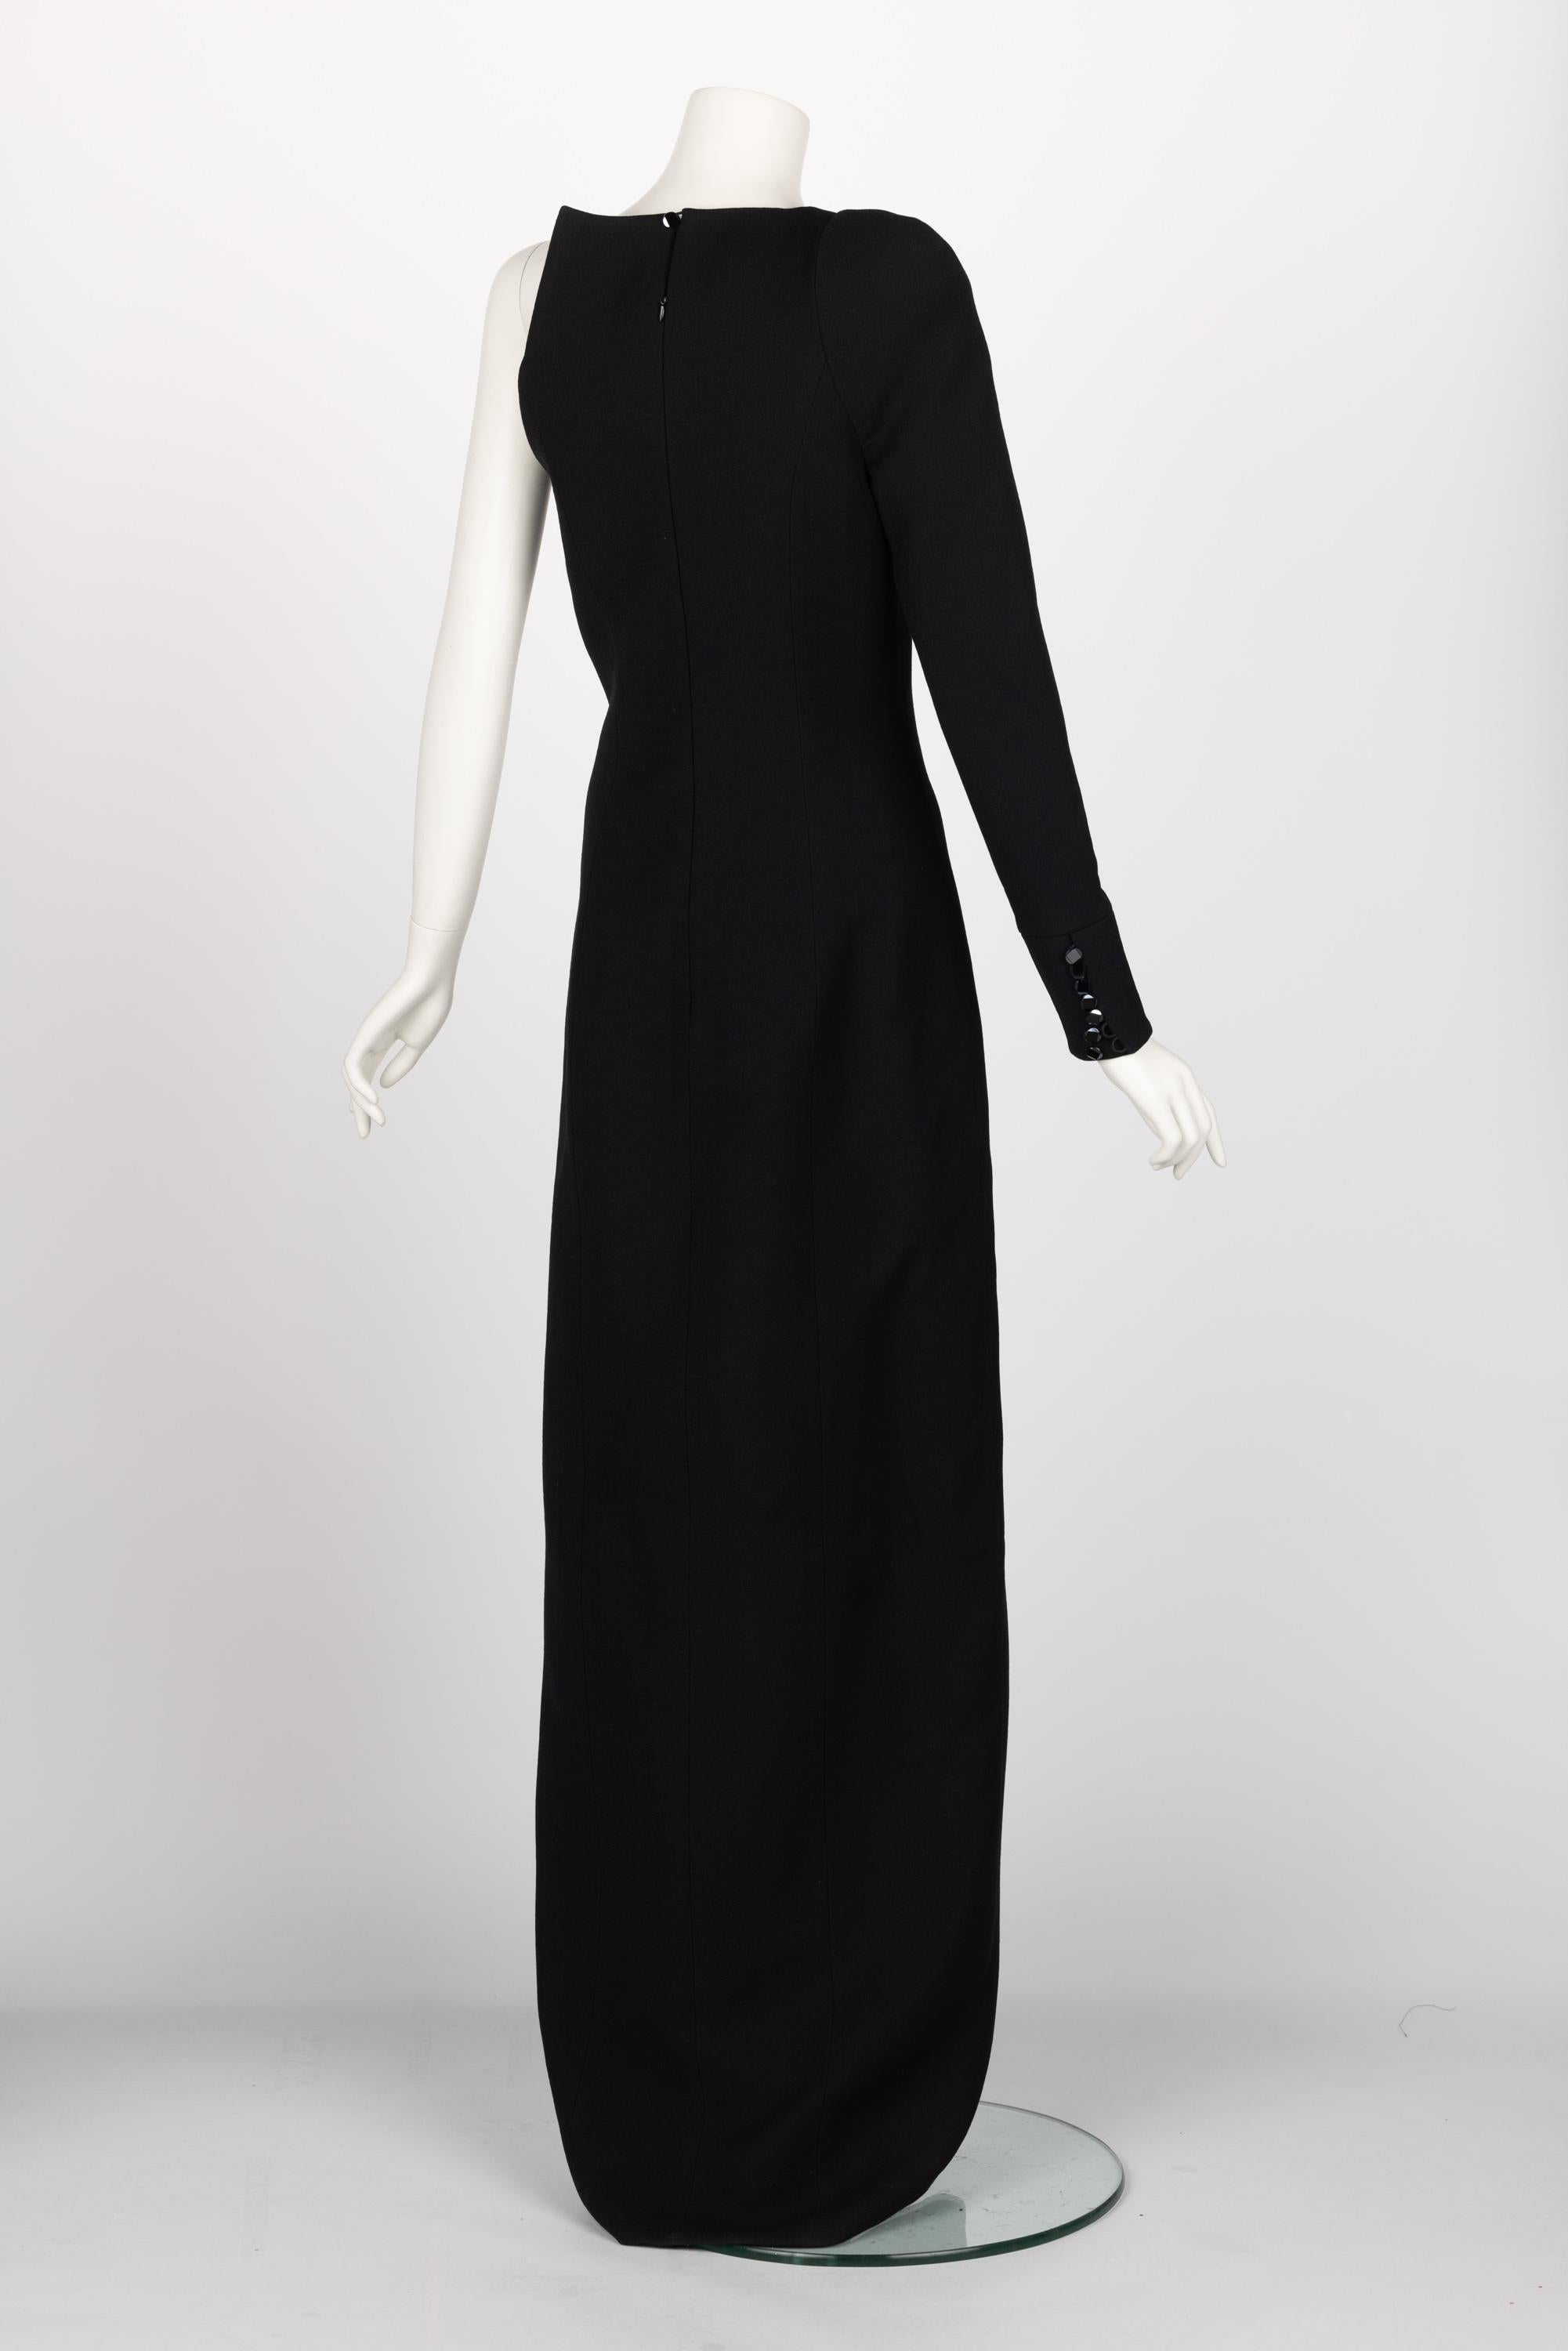 Women's Ronald van der Kemp Demi Couture Fall 2018 Sculptural Black Dress  For Sale